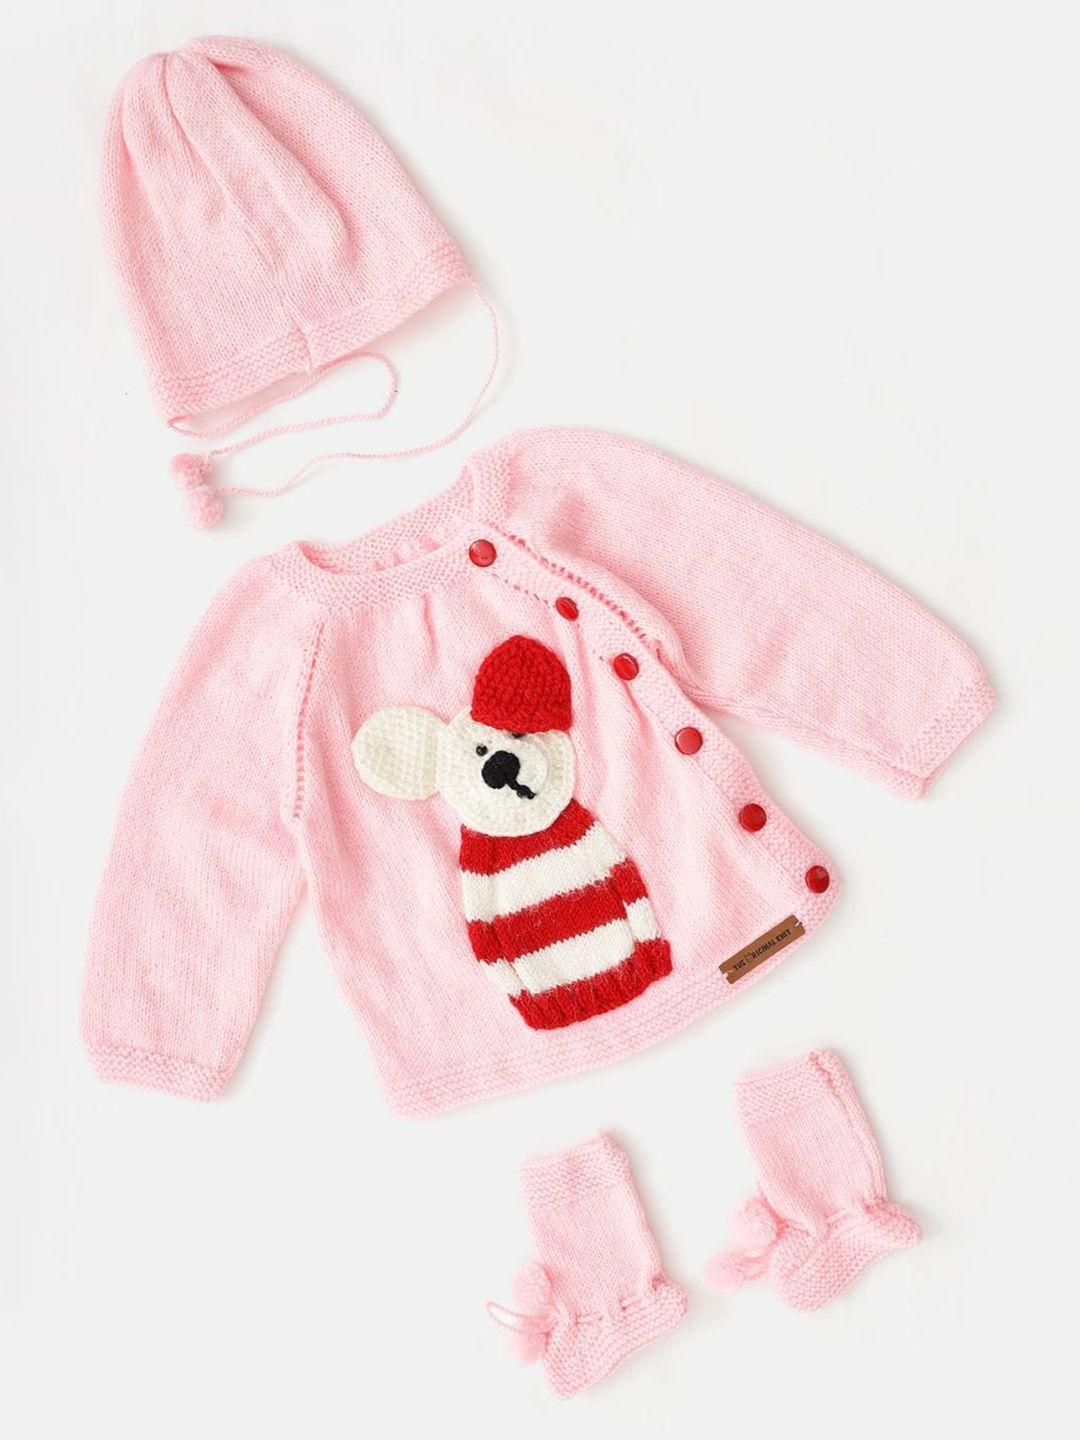 the original knit unisex kids pink & red printed cardigan